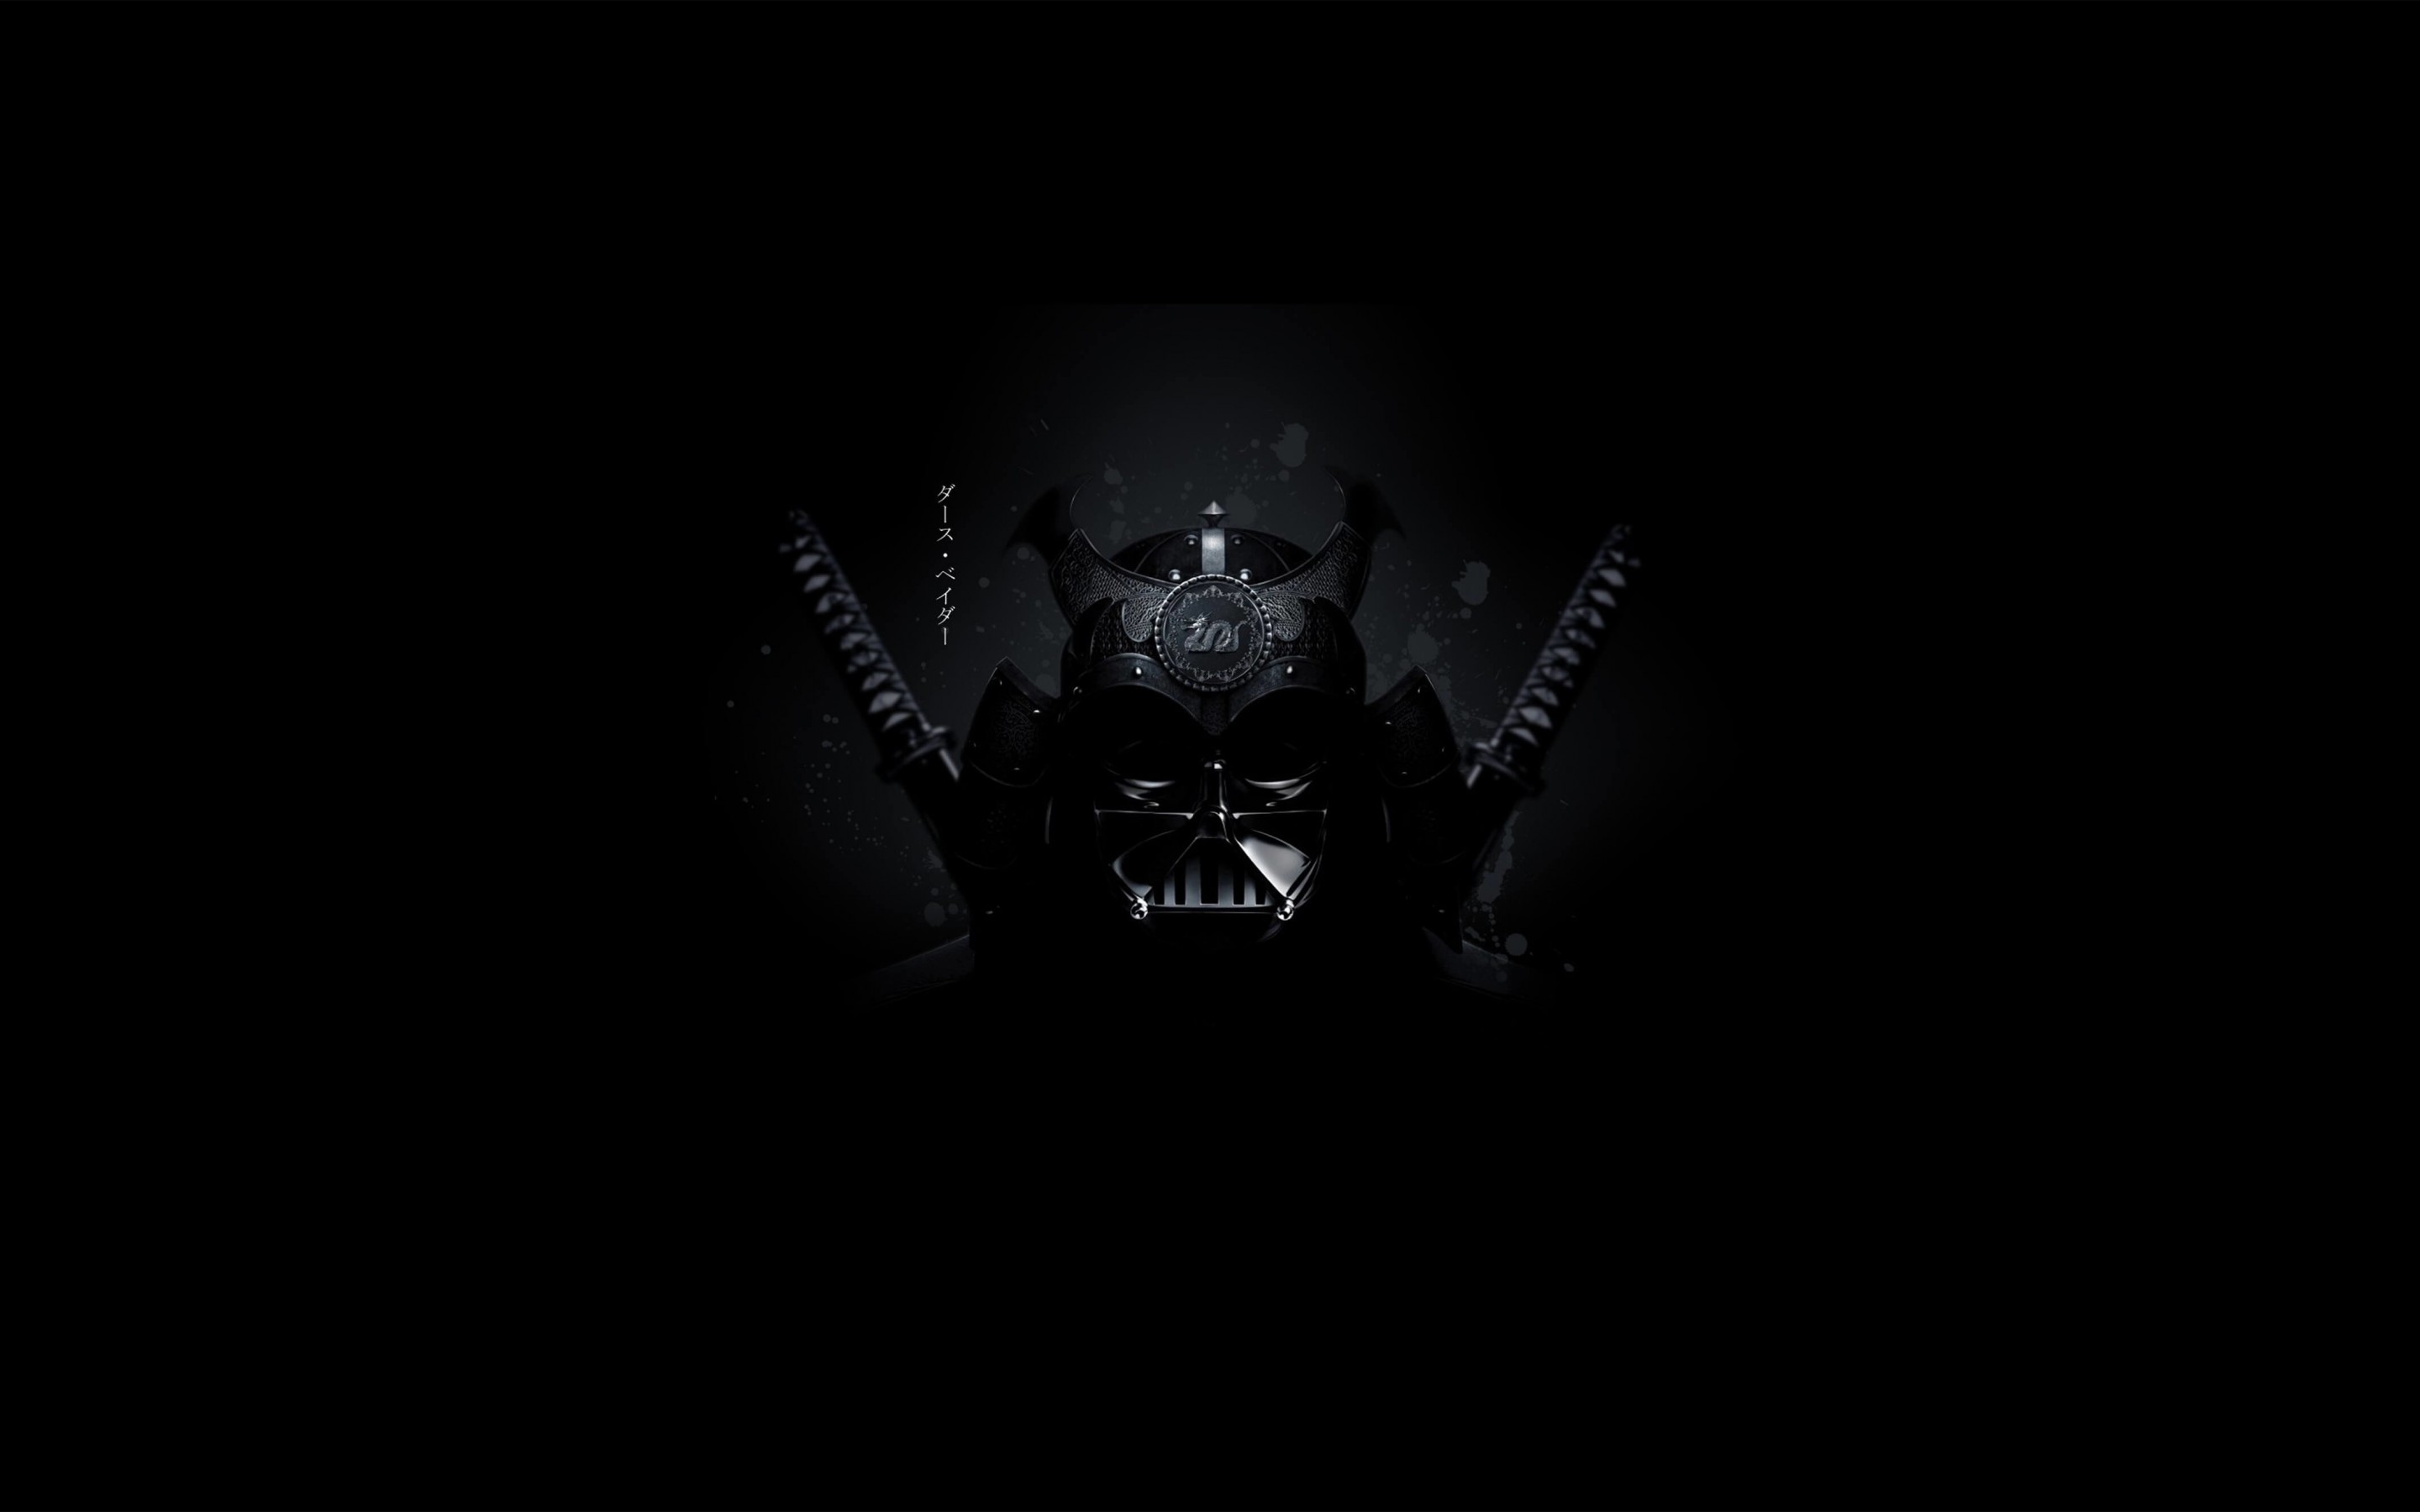 Samurai Darth Vader Wallpaper for Desktop 2880x1800